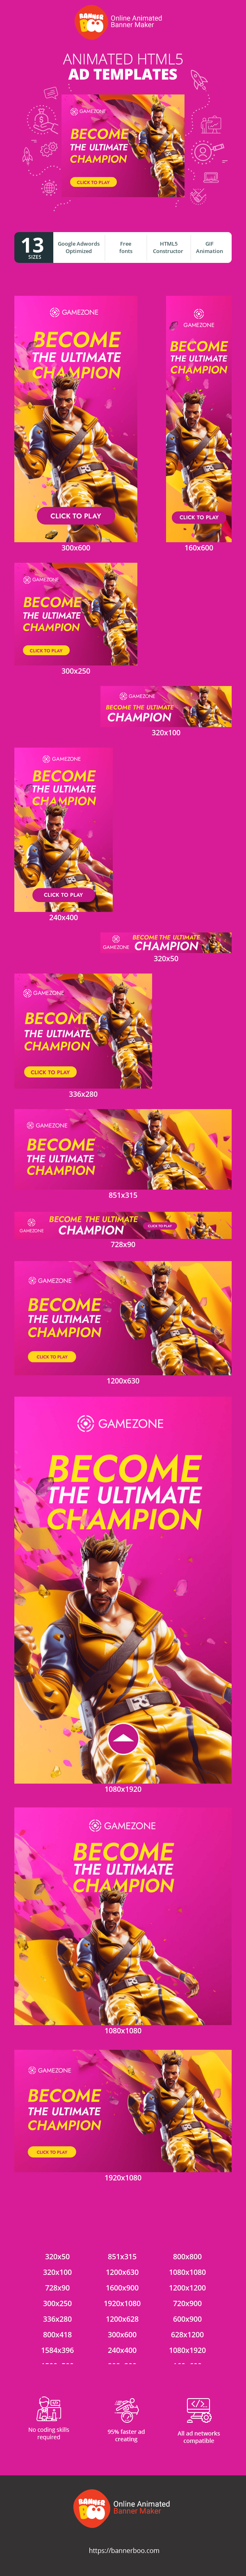 Шаблон рекламного банера — Become the Ultimate Champion — Gaming